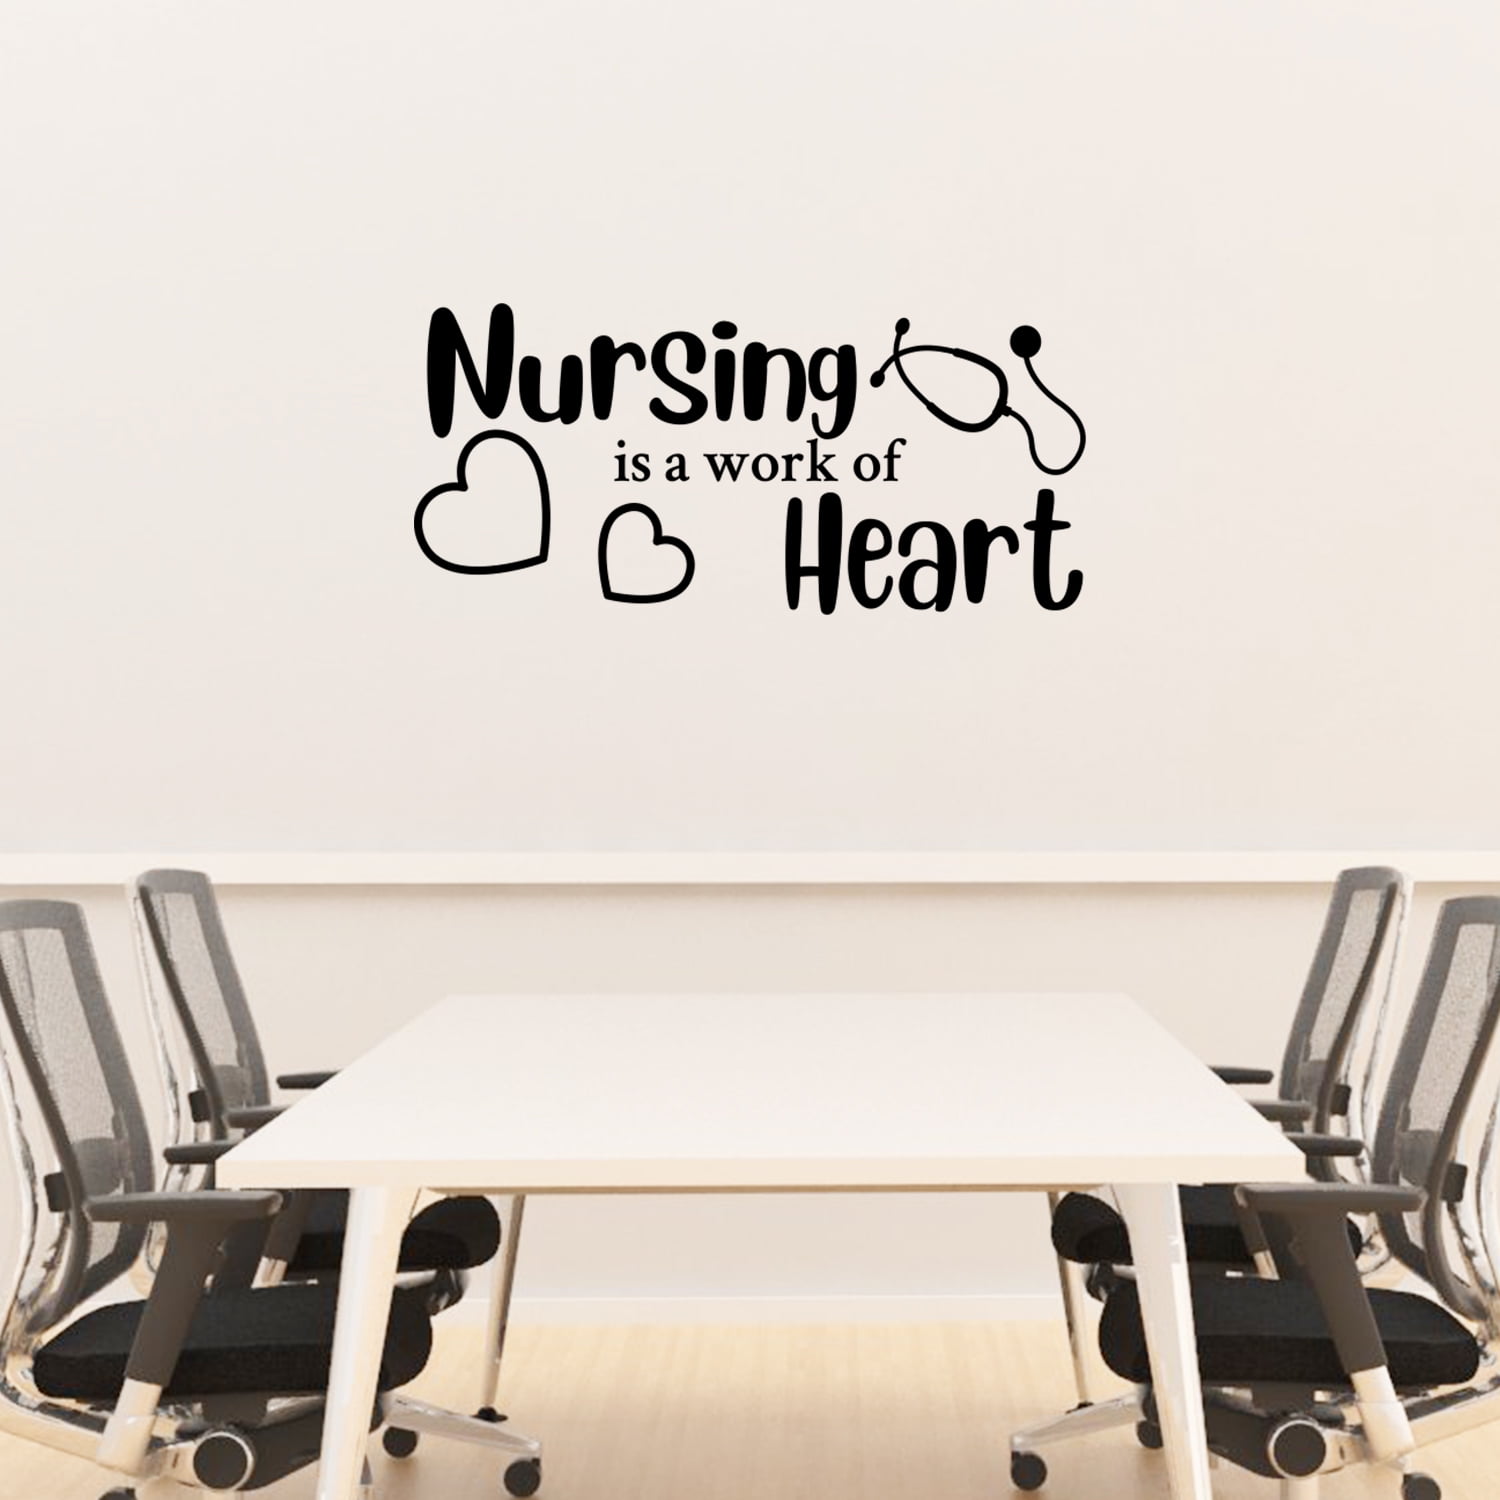 Nursing Is a Work of Heart Decal Nurses Medical Wall Sticker Quote Nurse Appreciation Gift Vinyl Lettering Decor